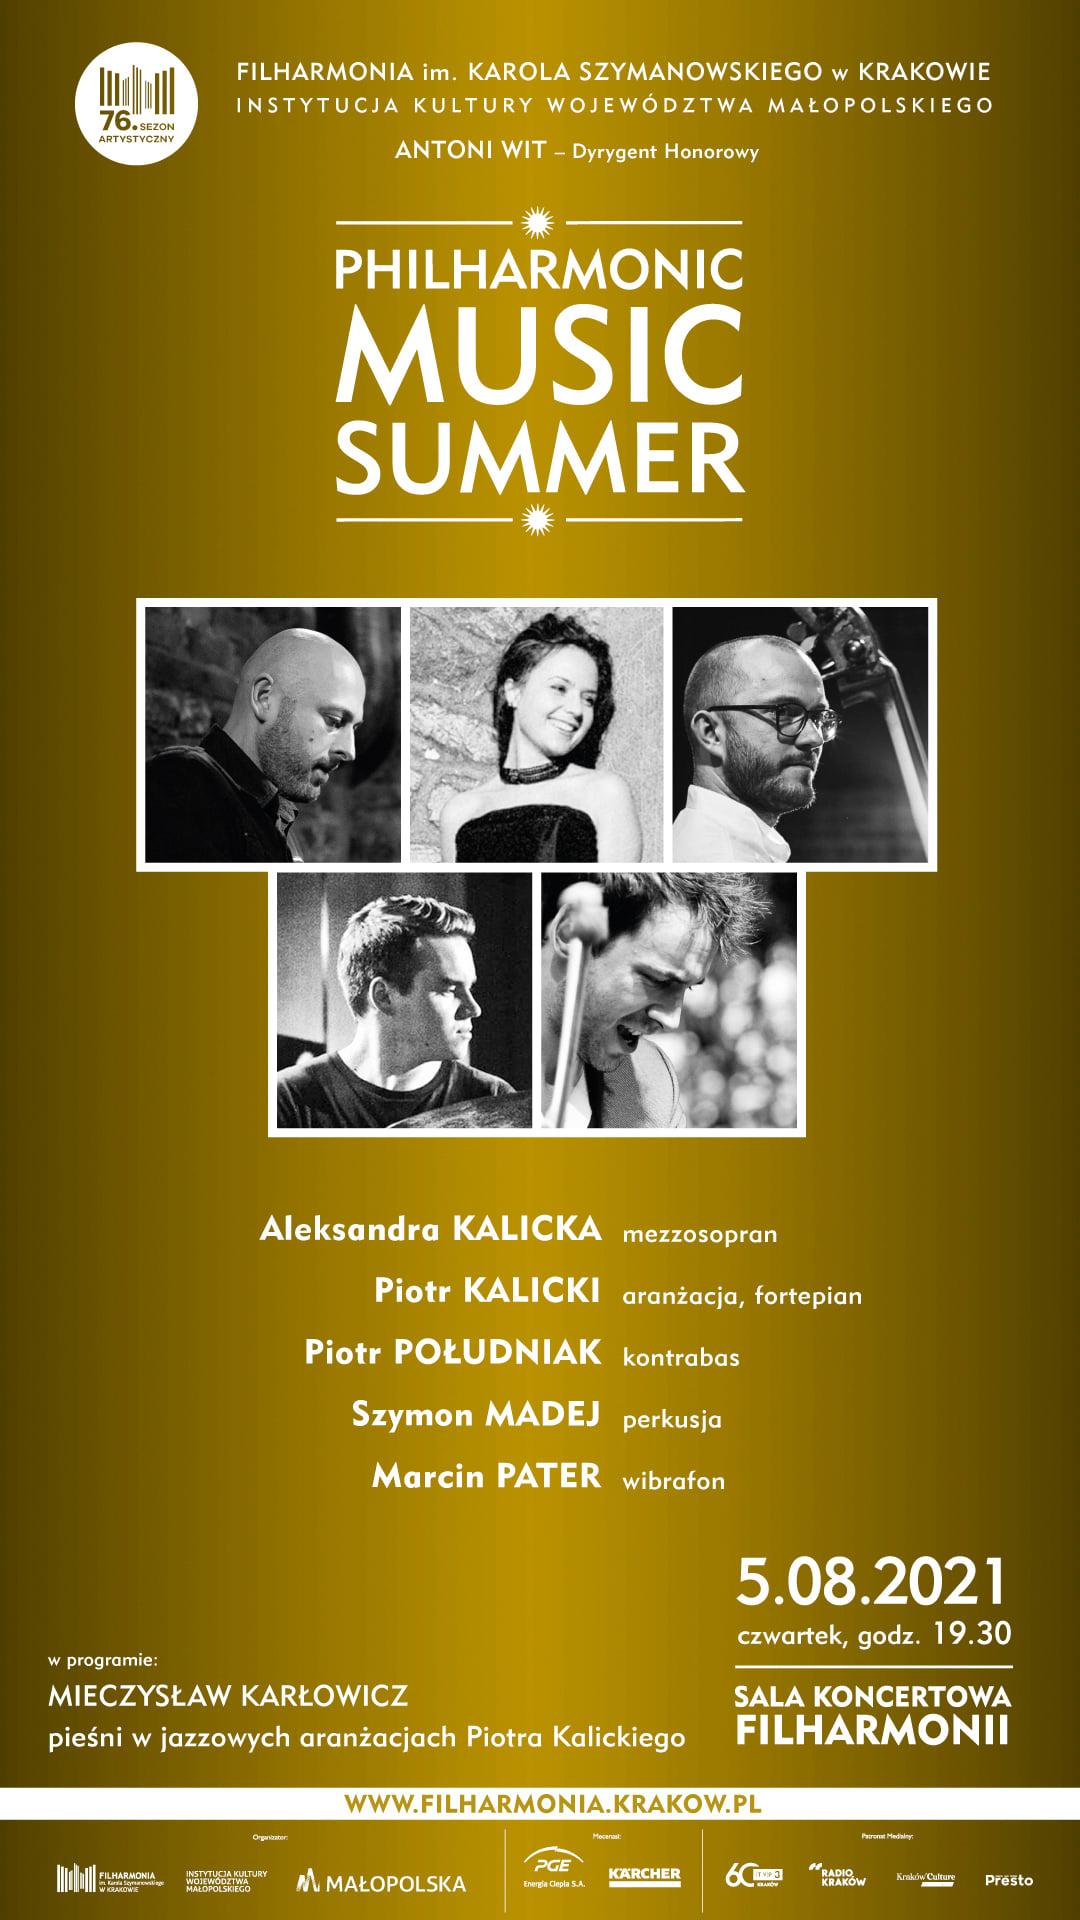 Plakat promujący koncert z cyklu Philharmonic Music Summer.